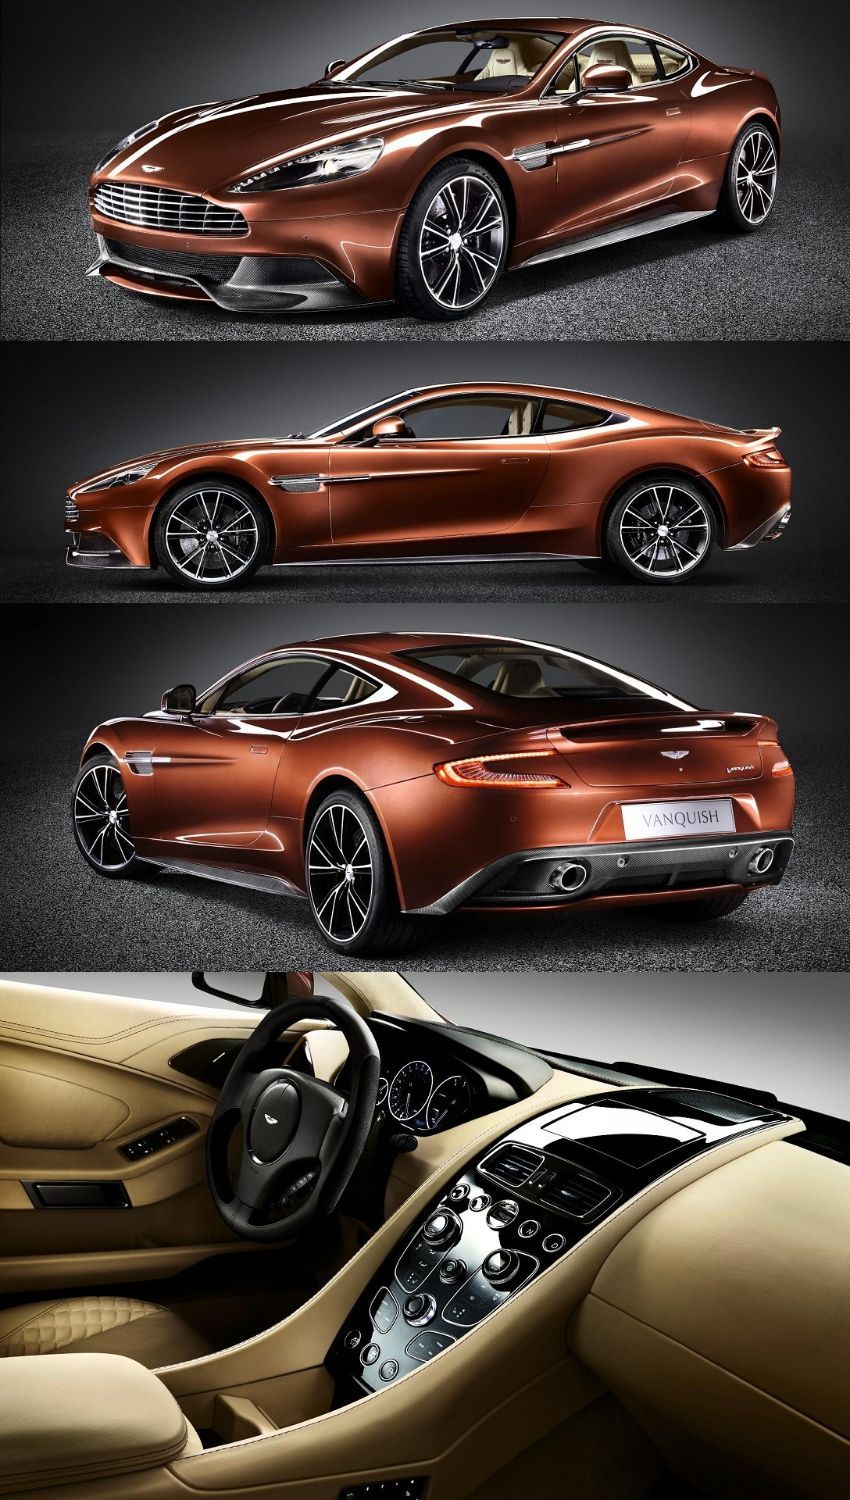 Aston Martin Vanquish   Stunning Luxury Sports Car